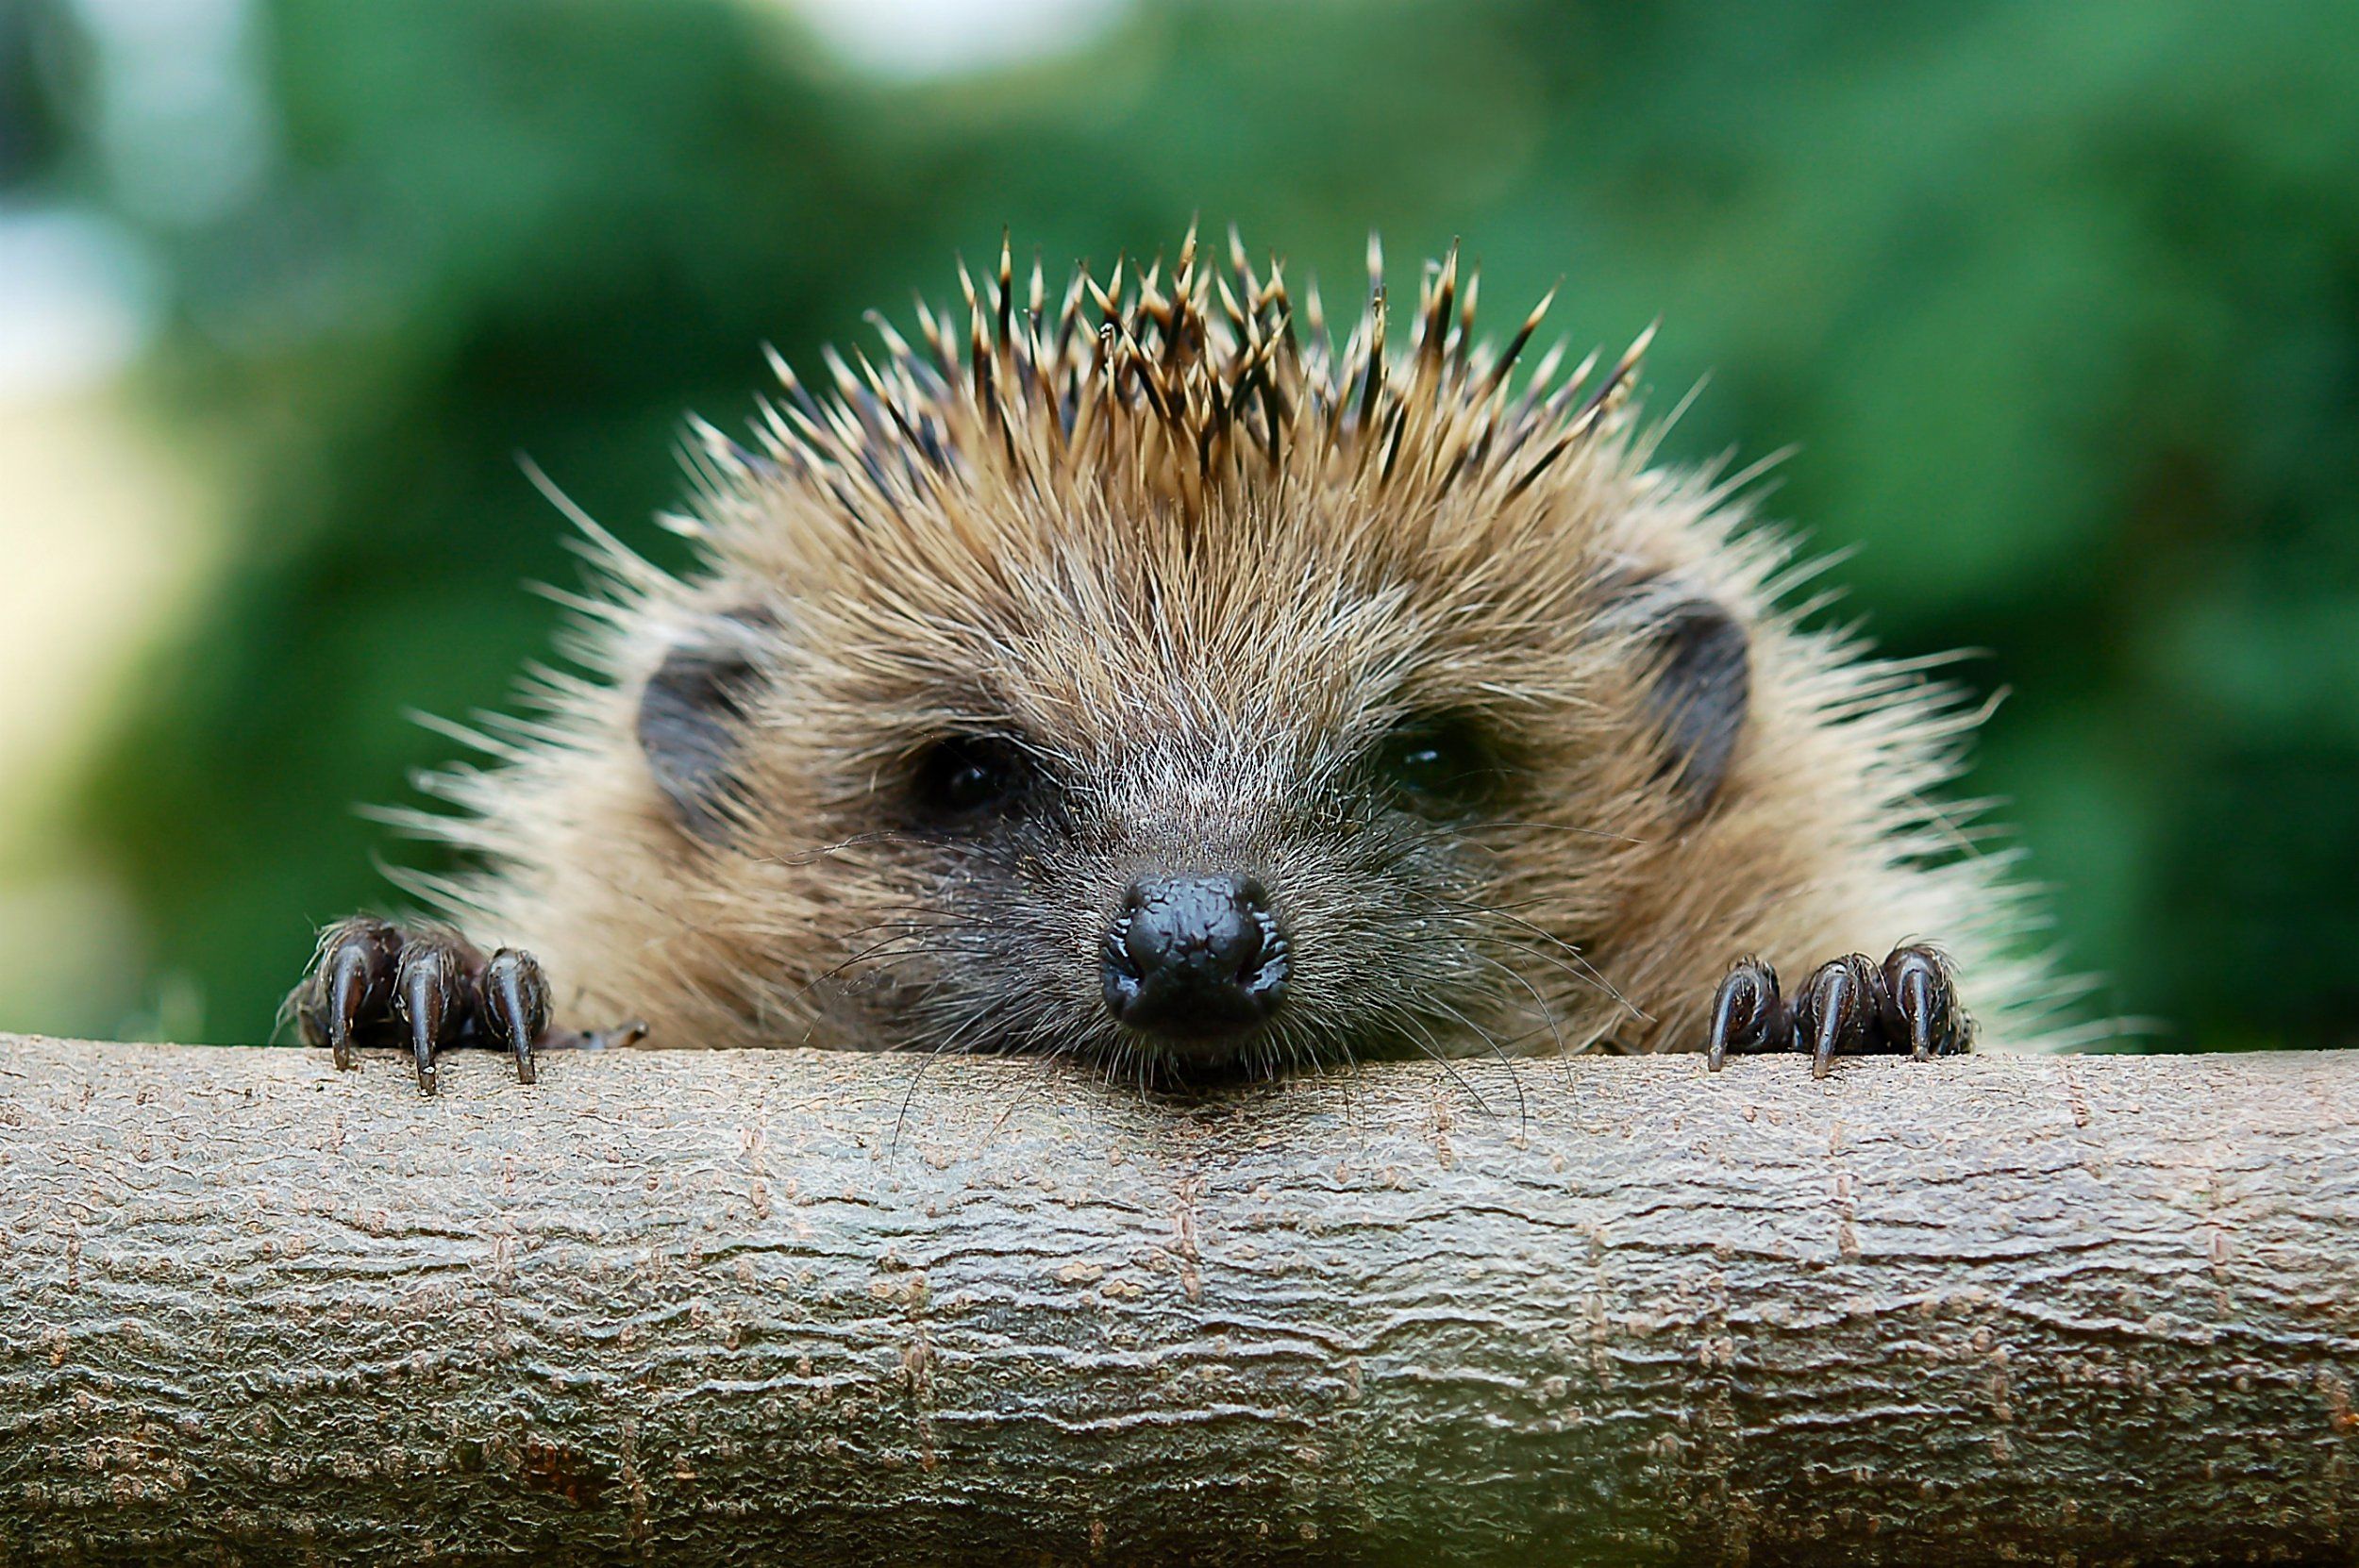 Hedgehog Image